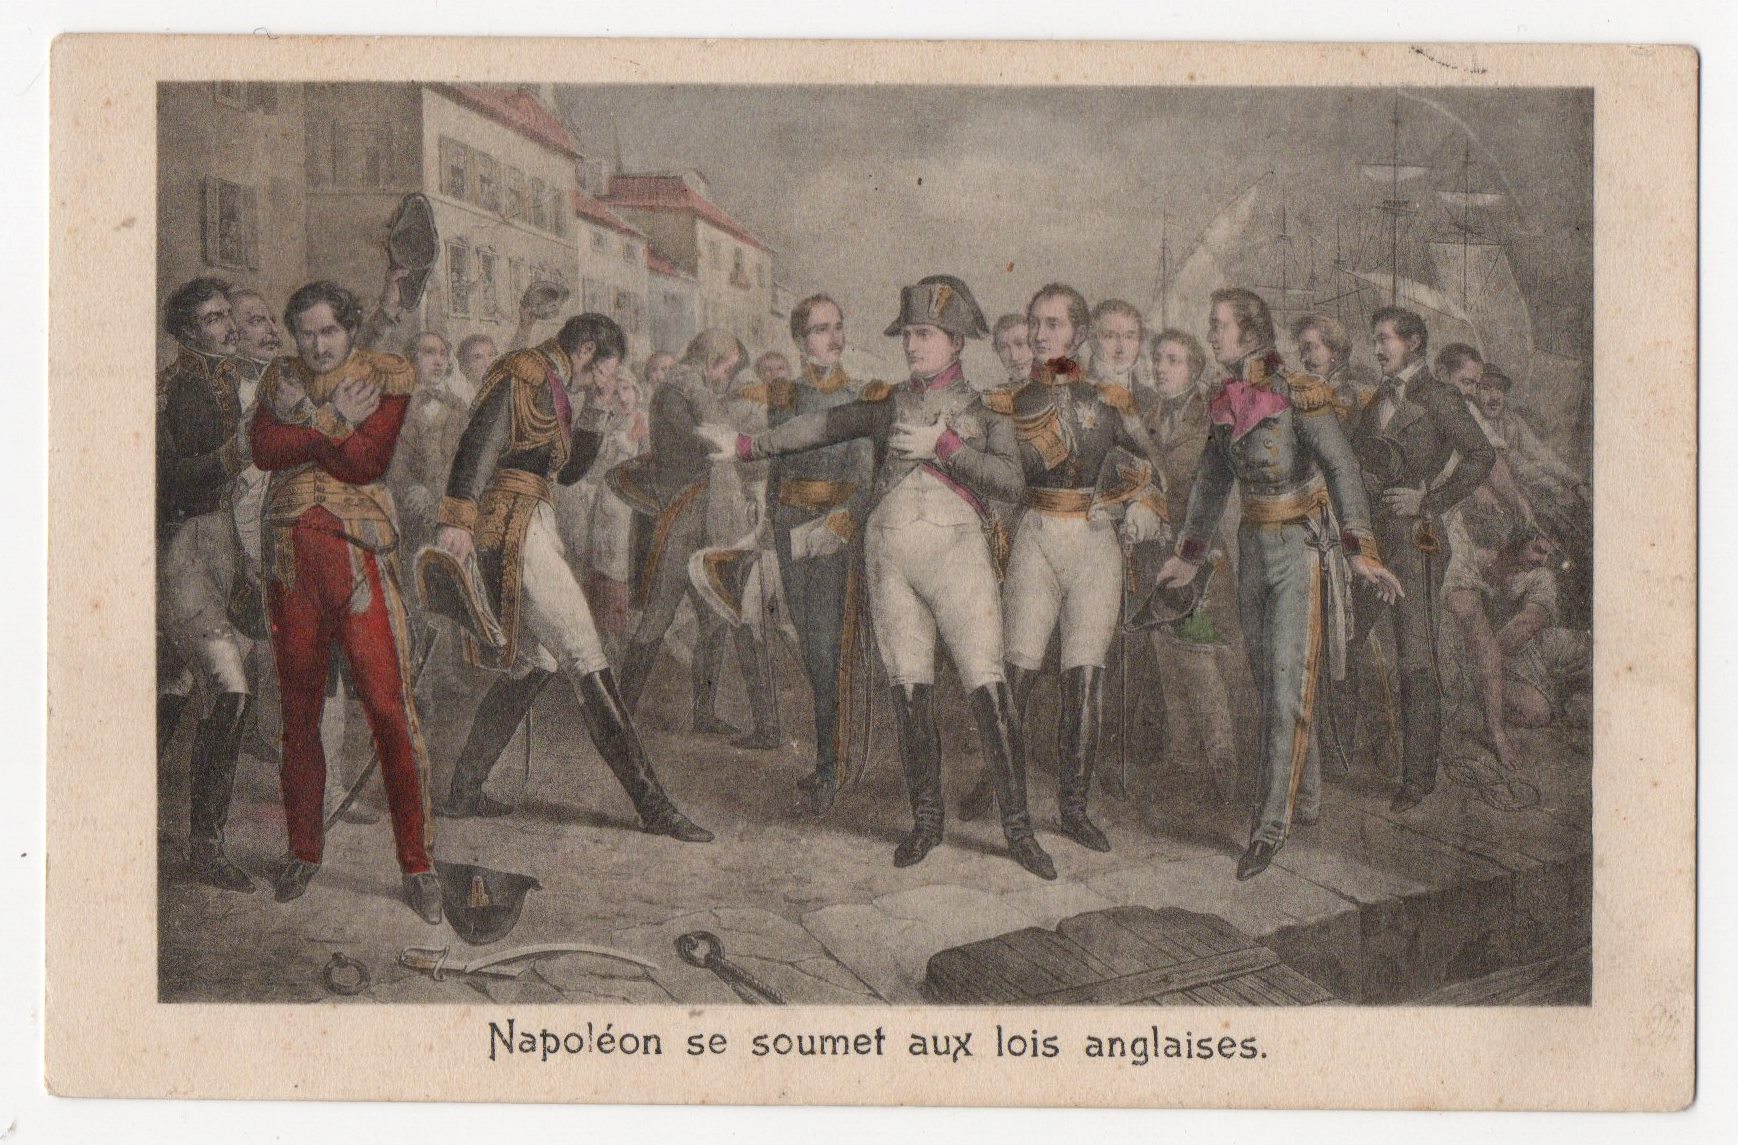 Поштова листівка. "Napoléon se soumet aux lois anglaises"